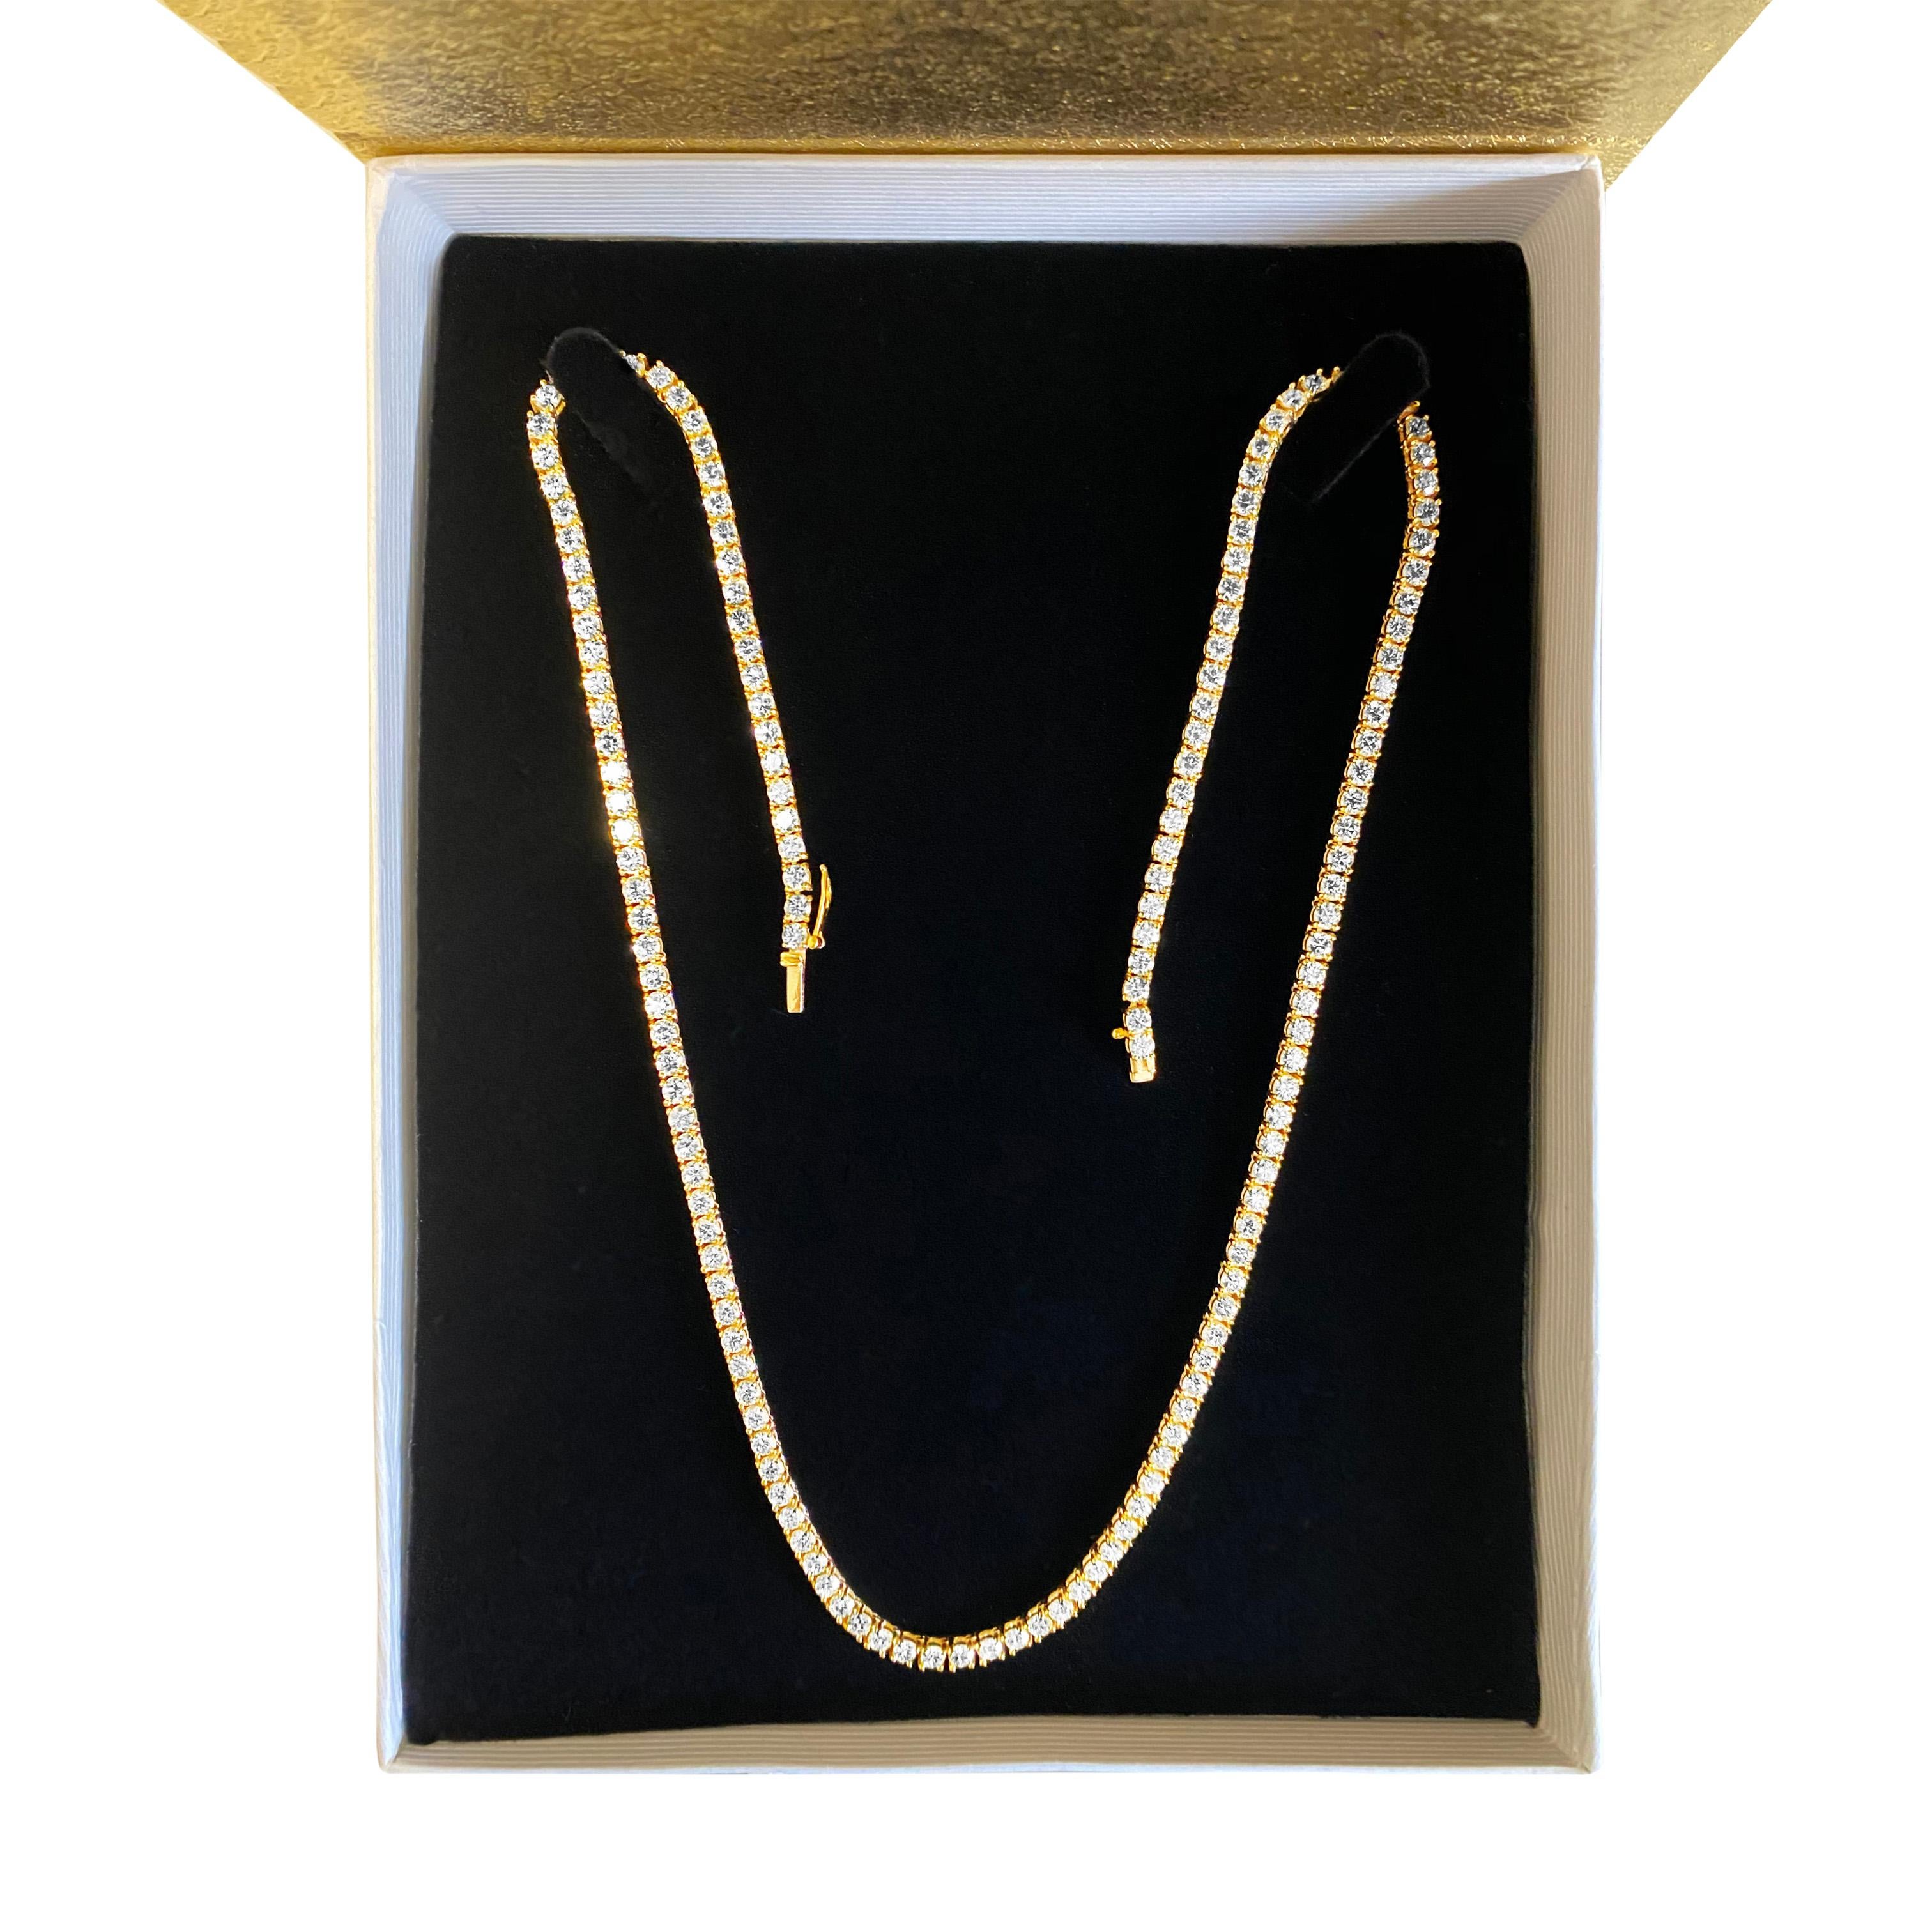 Brilliant Cut 15.00 Carat VVS Diamond Tennis Necklace in 14k Gold For Sale